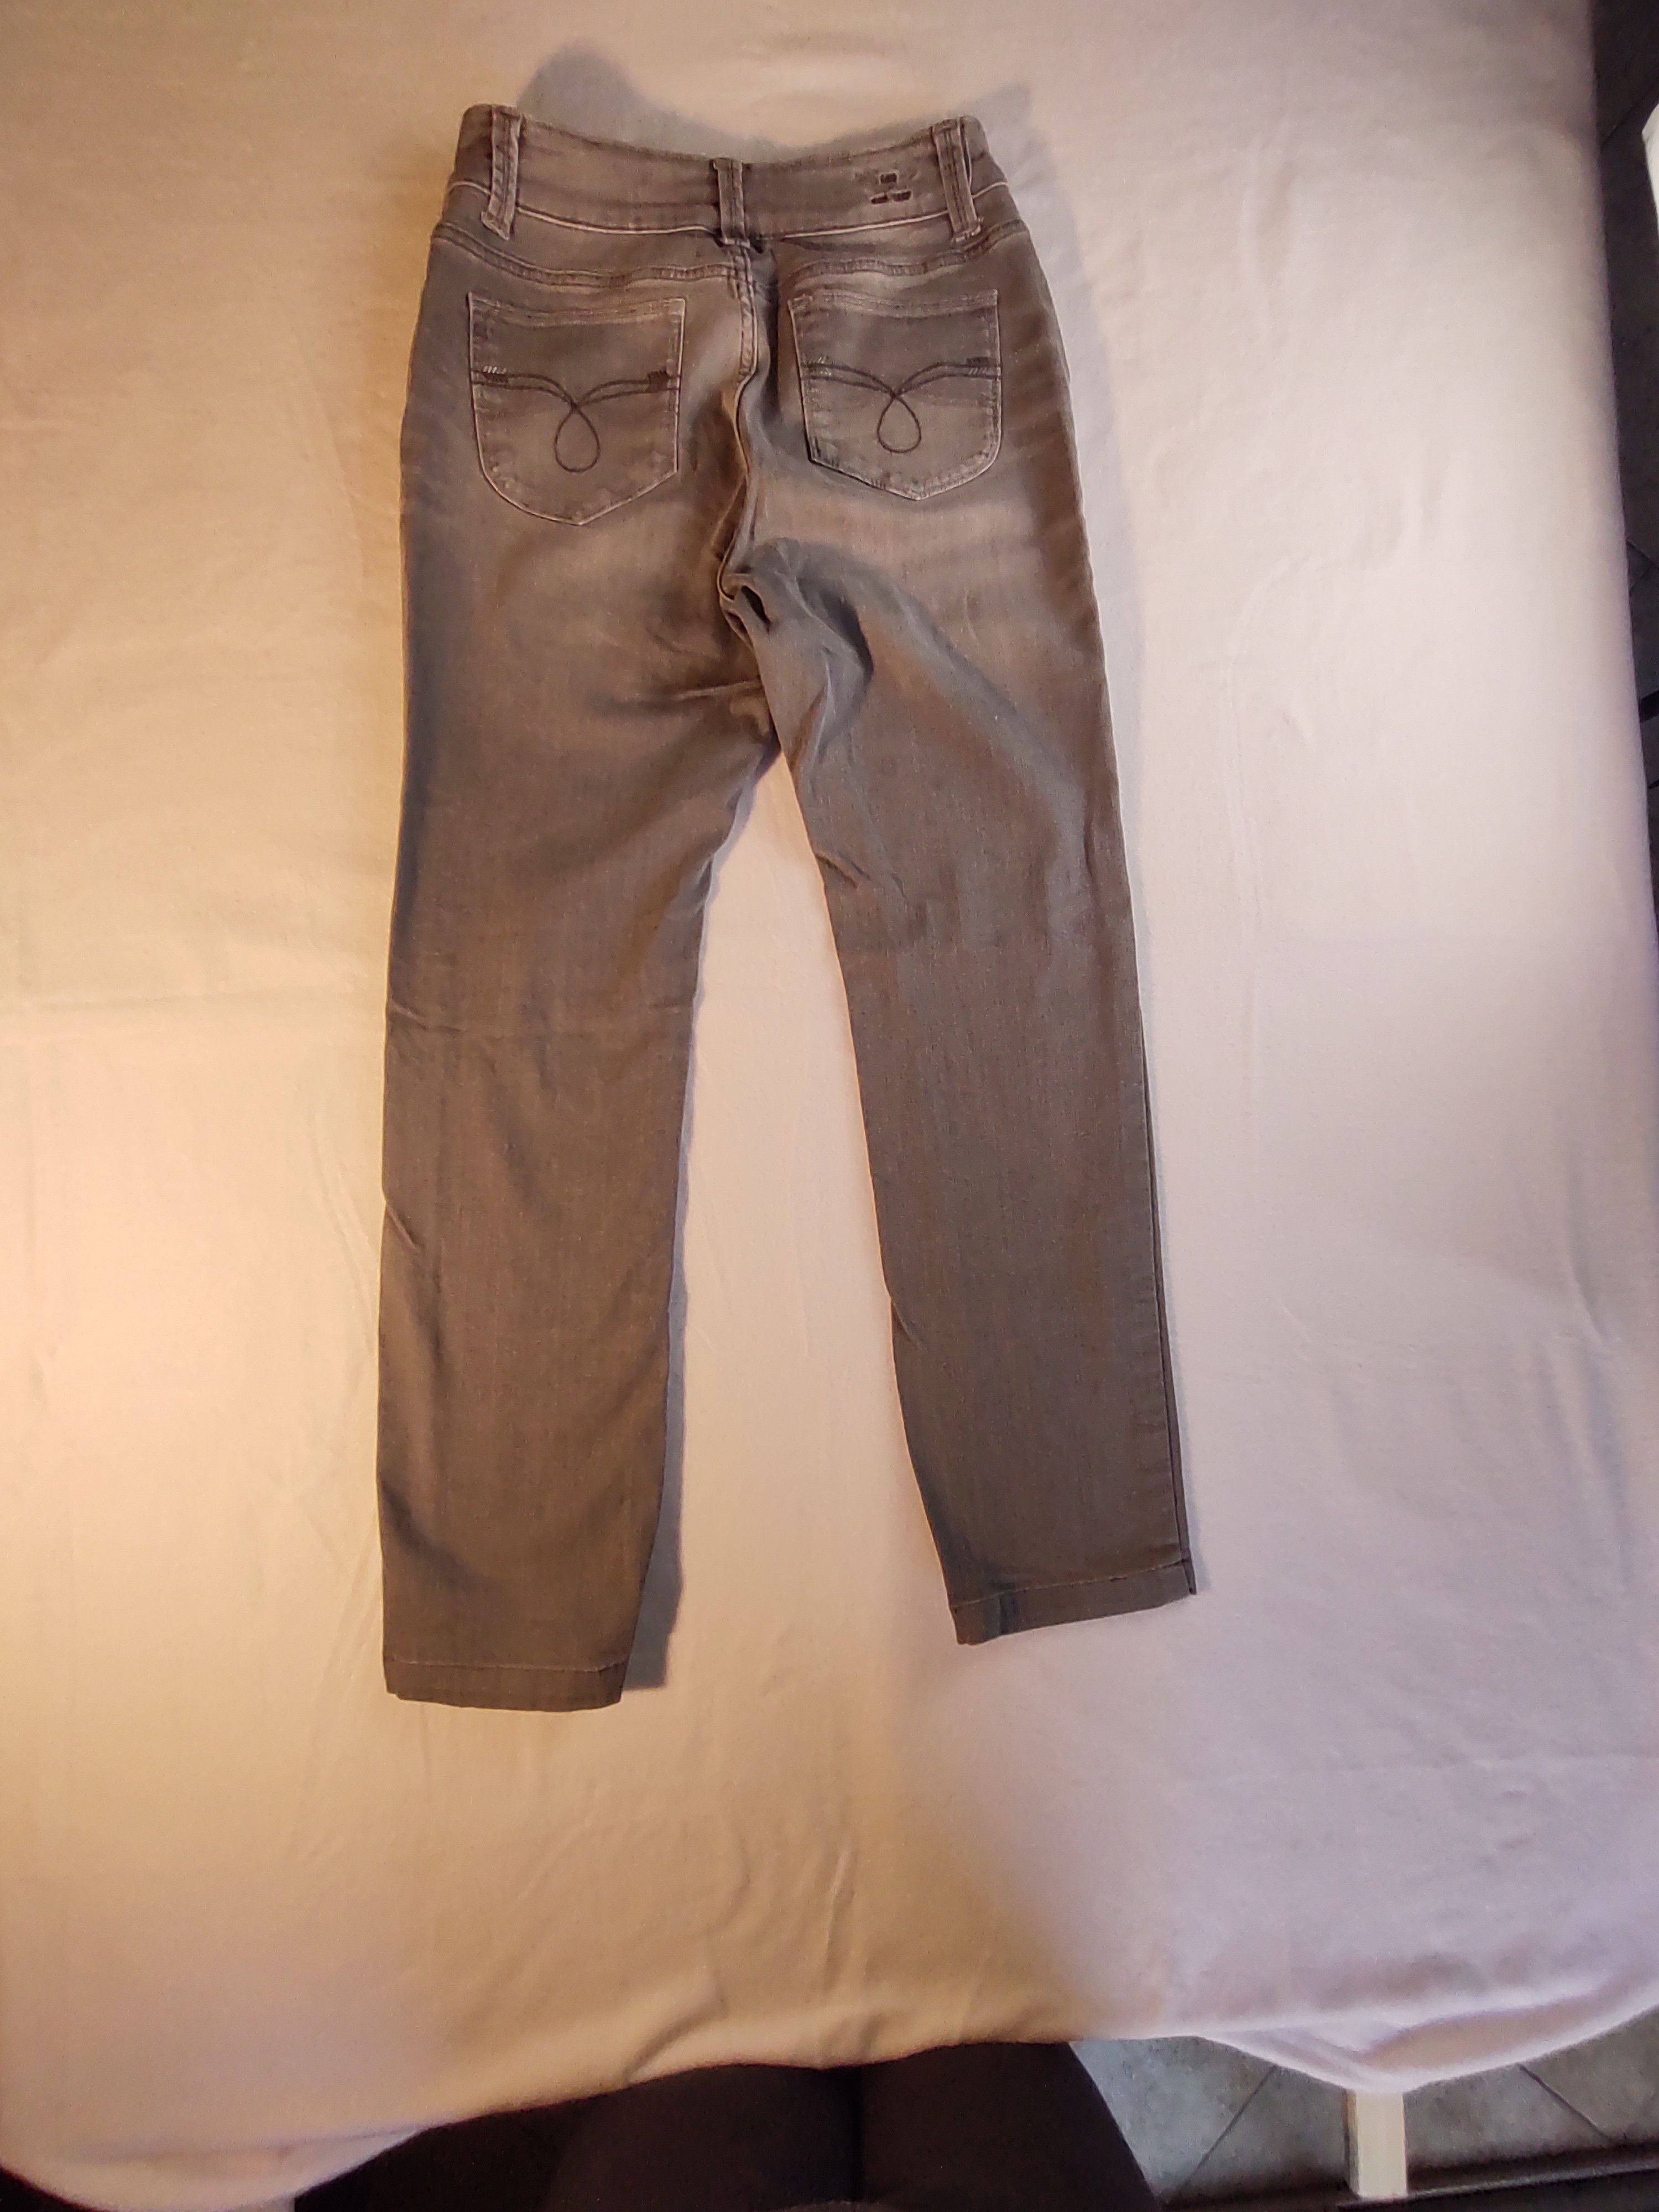 Lee Lee Perfect Fit Just Below Waist denim jeans gray ash wash Size 28" / US 6 / IT 42 - 5 Thumbnail